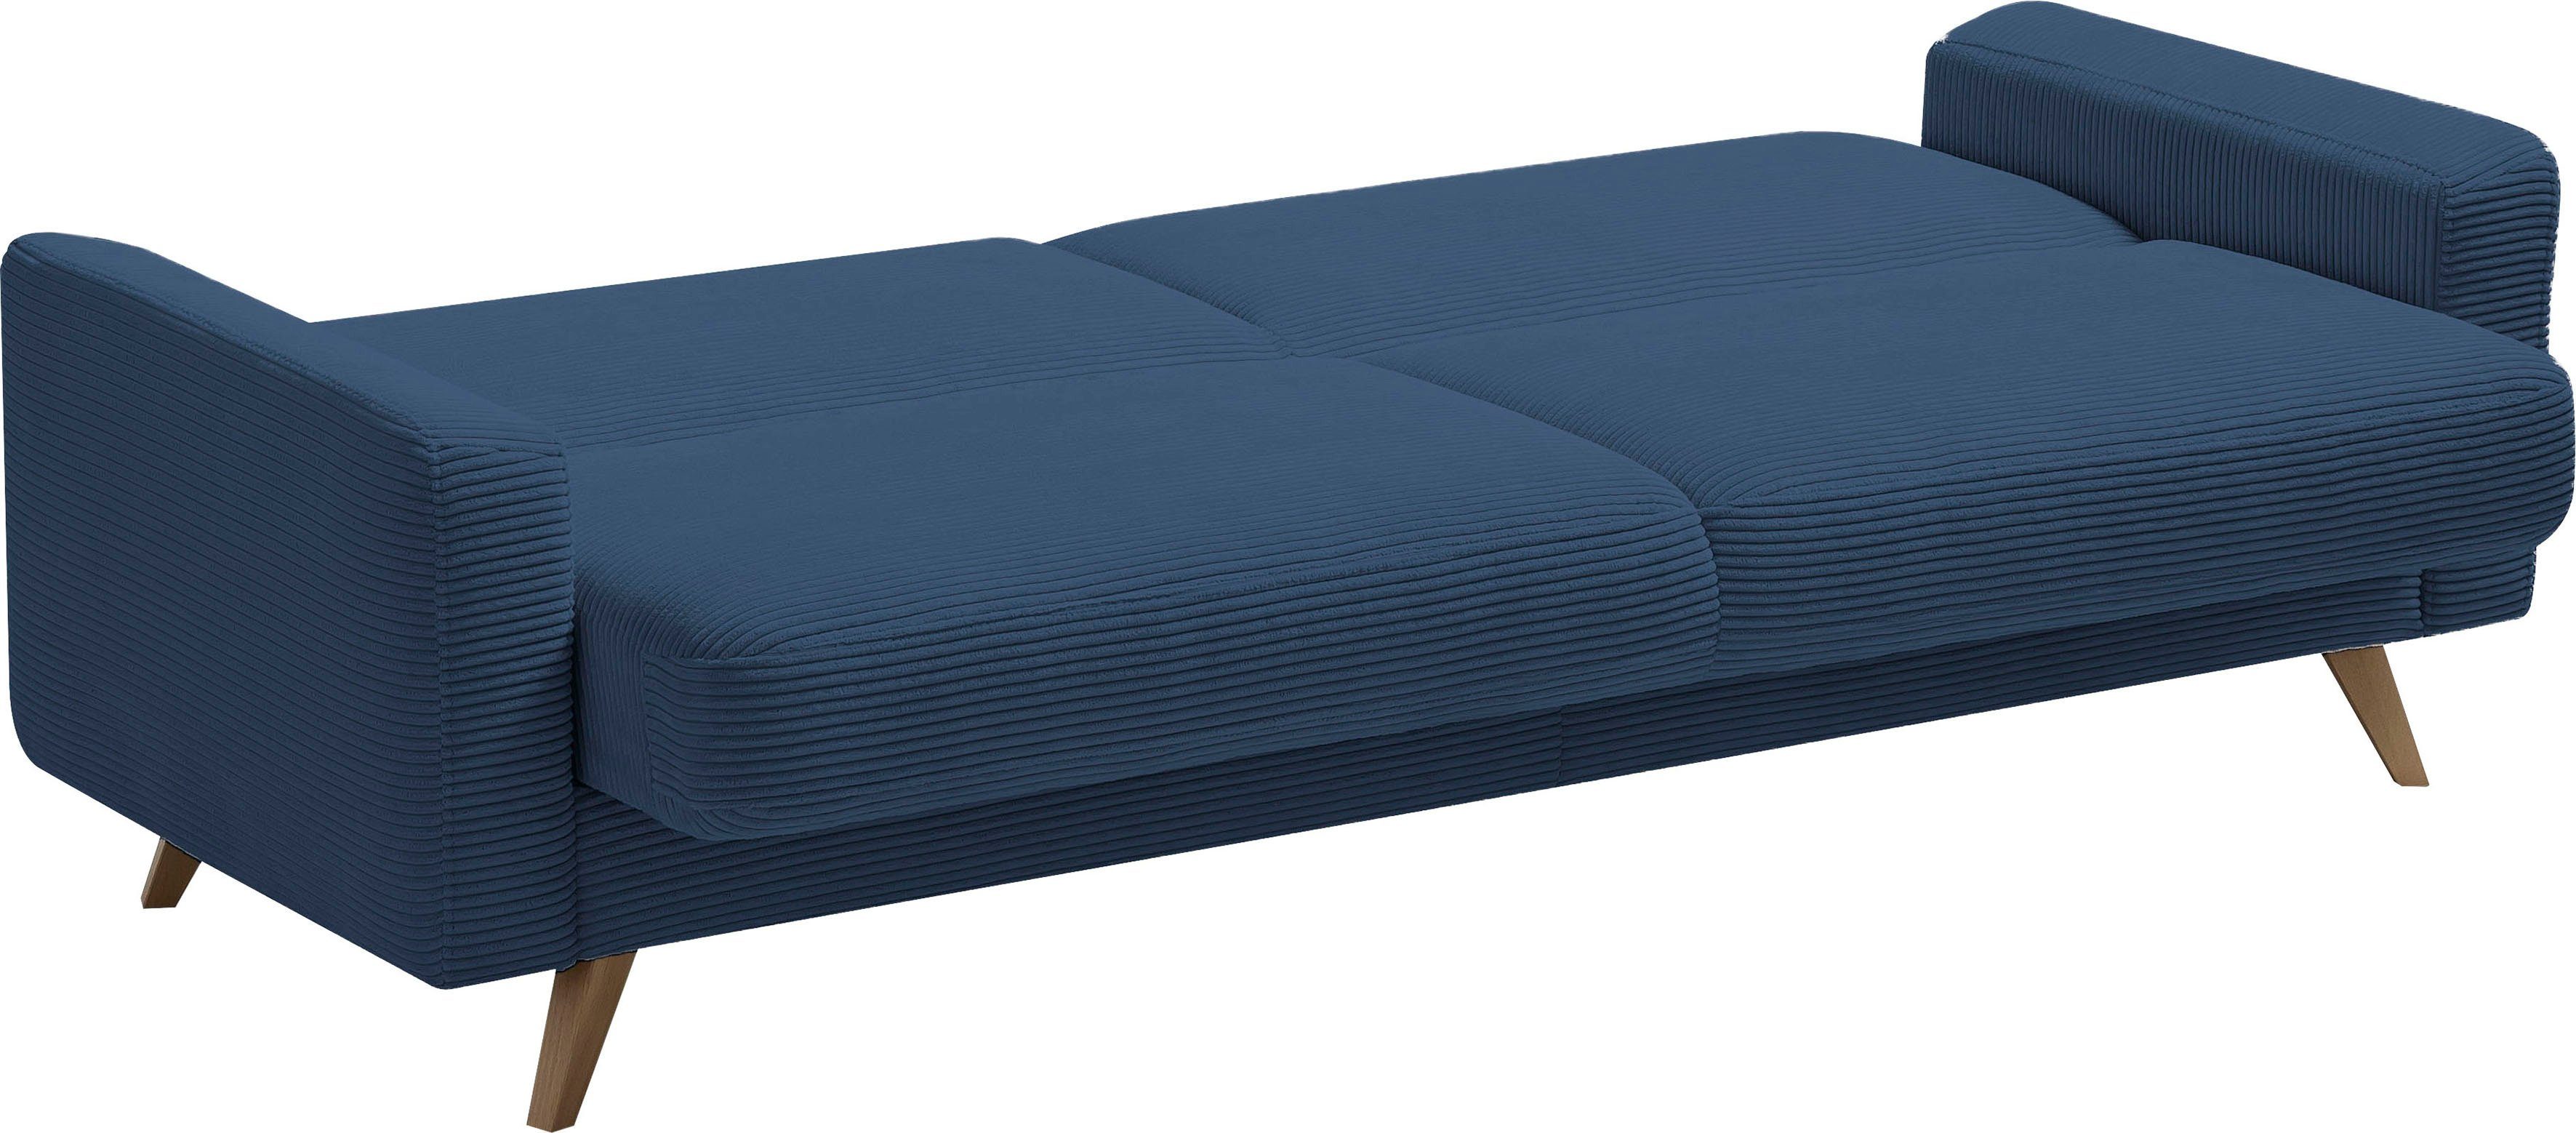 Bettkasten 3-Sitzer und Bettfunktion fashion sofa navy Samso, - Inklusive exxpo